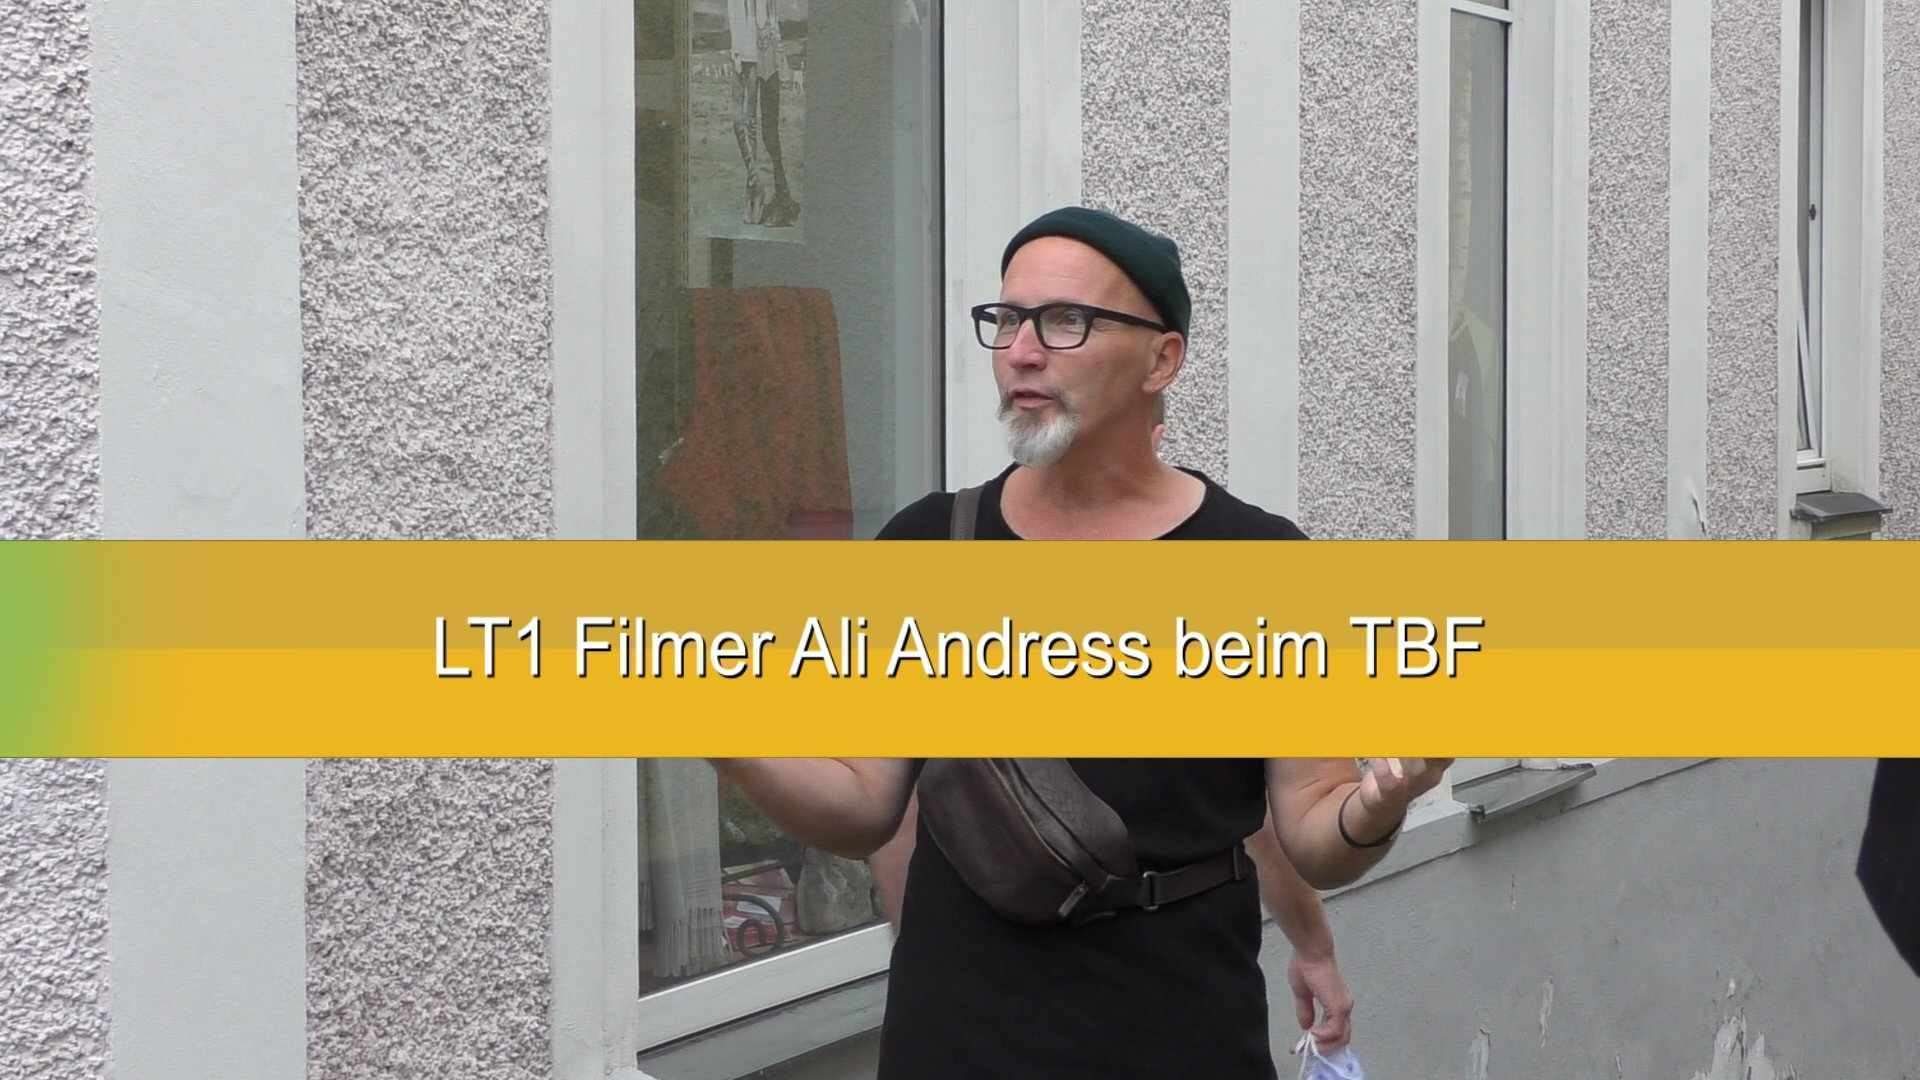 LT1 Filmer Ali Andress, beim TBF